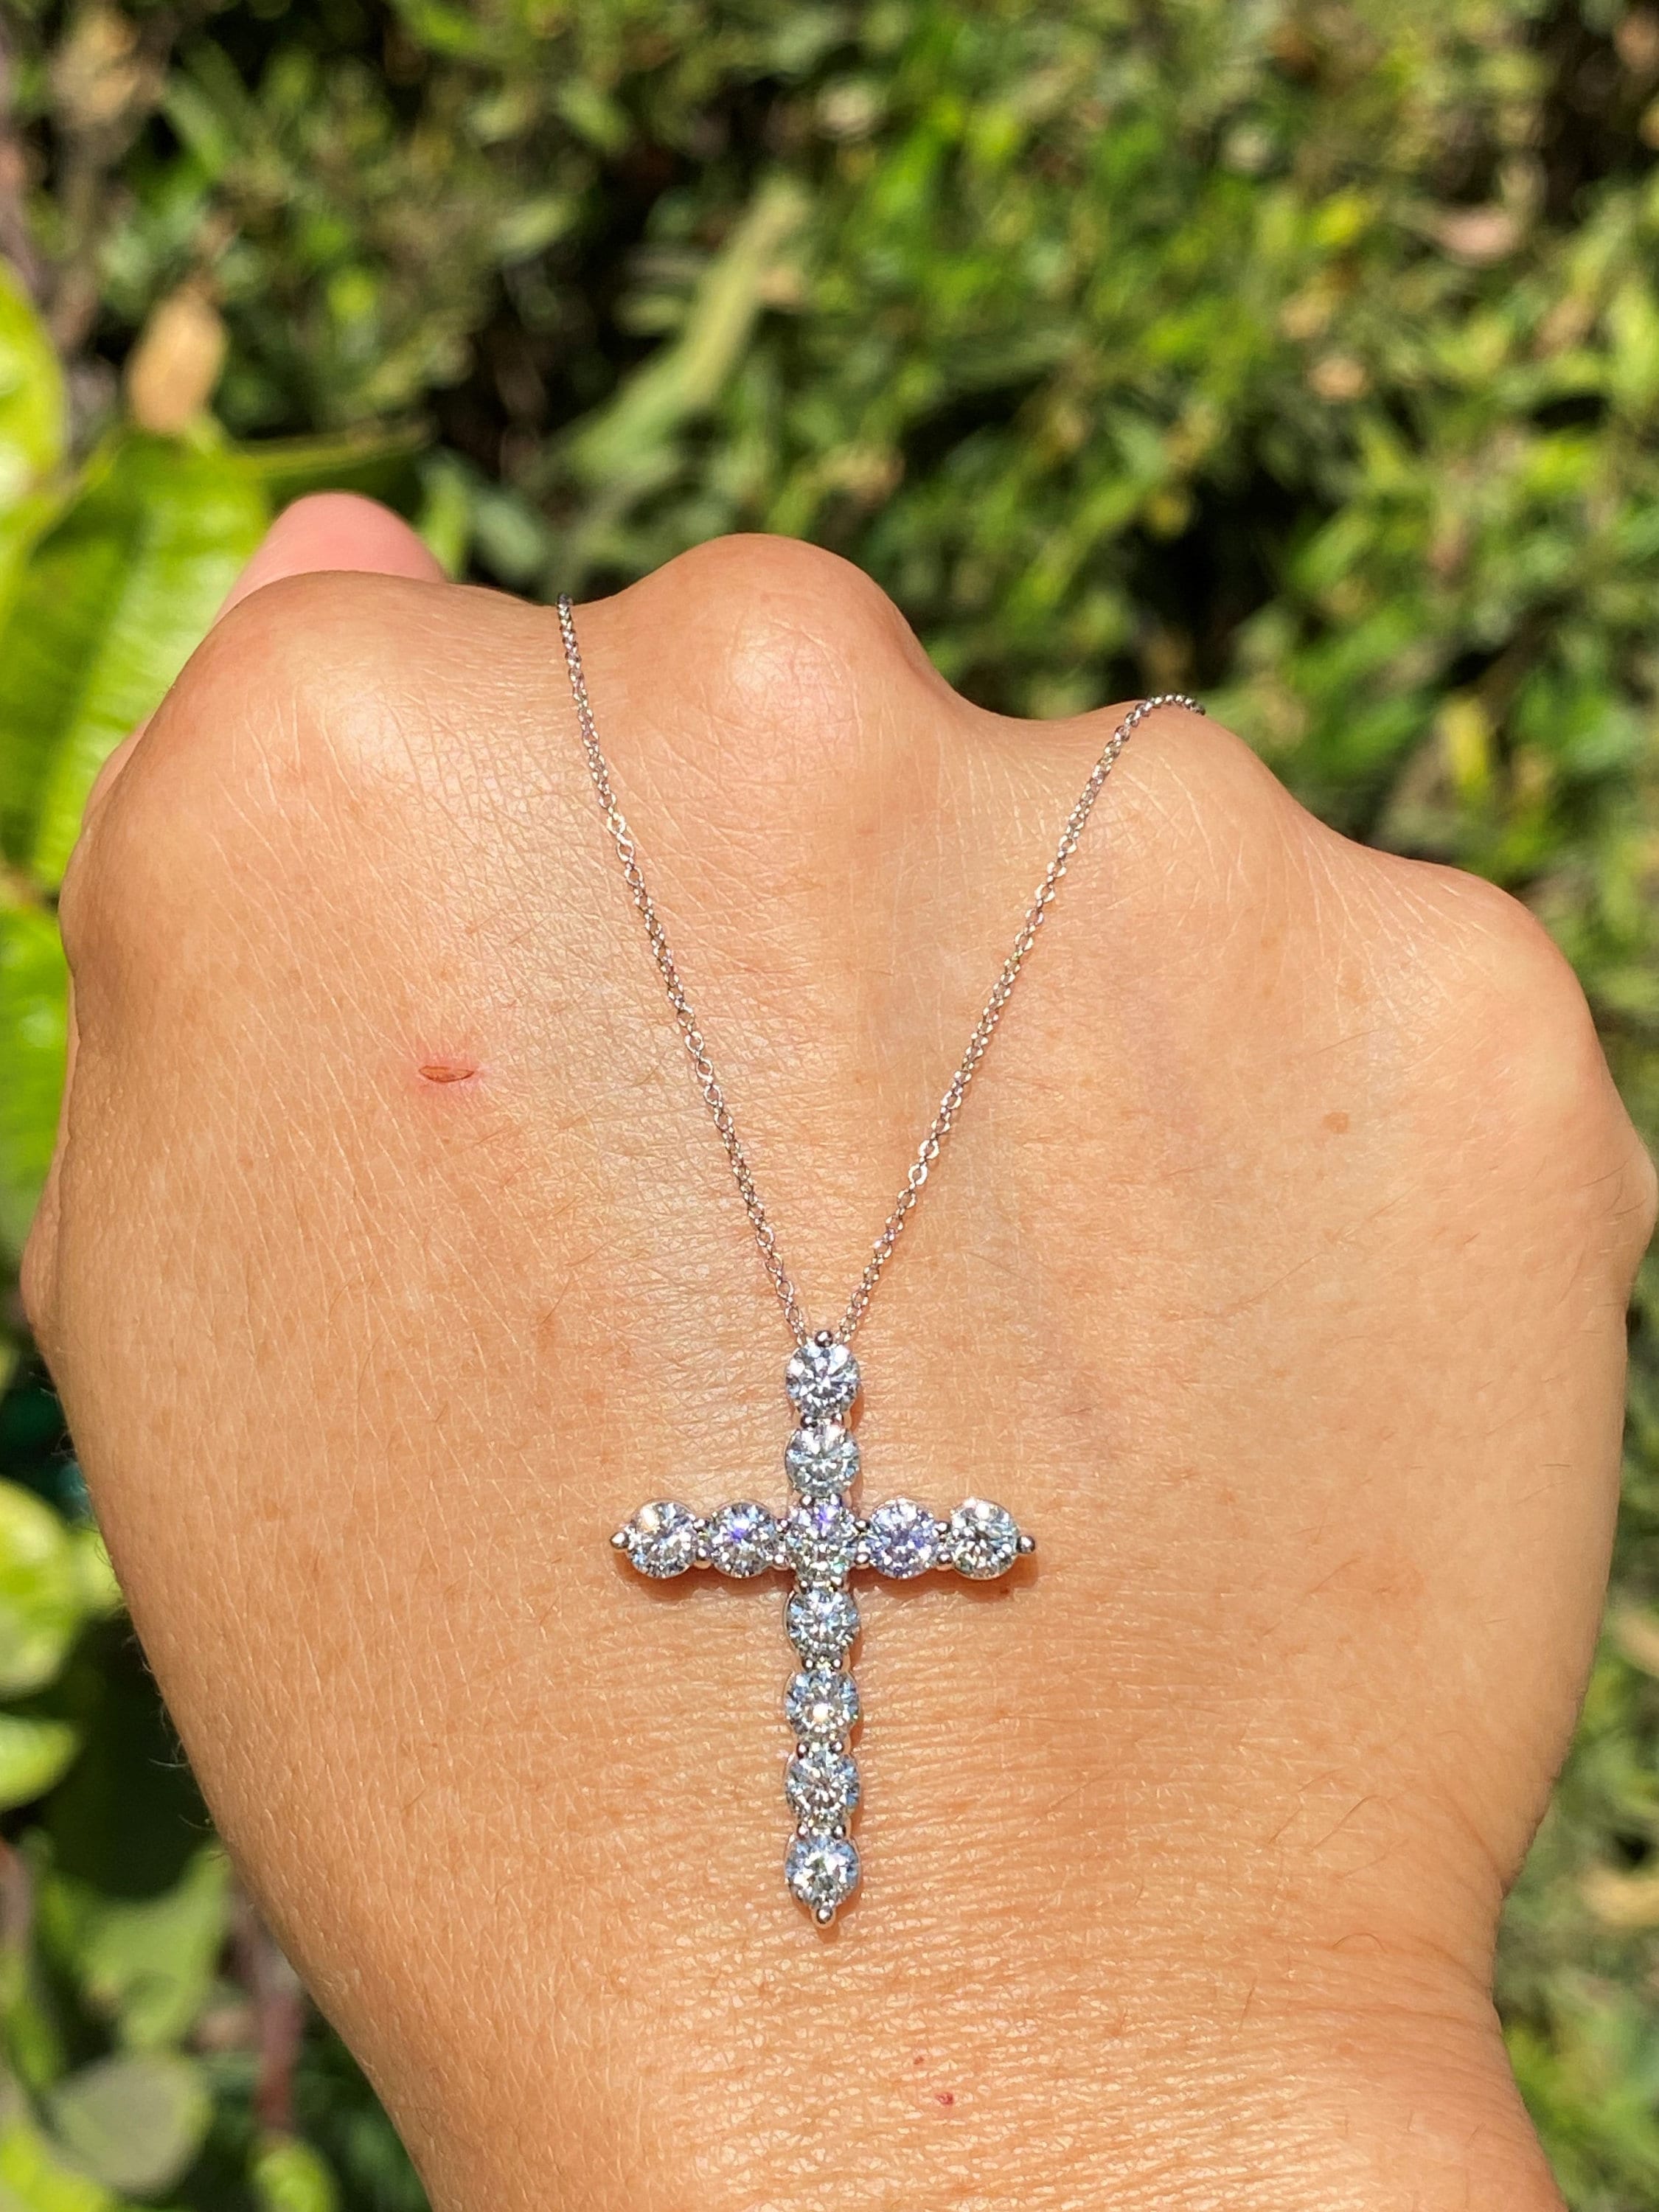 Diamond Cross Necklace - The Diamond Guys Collection